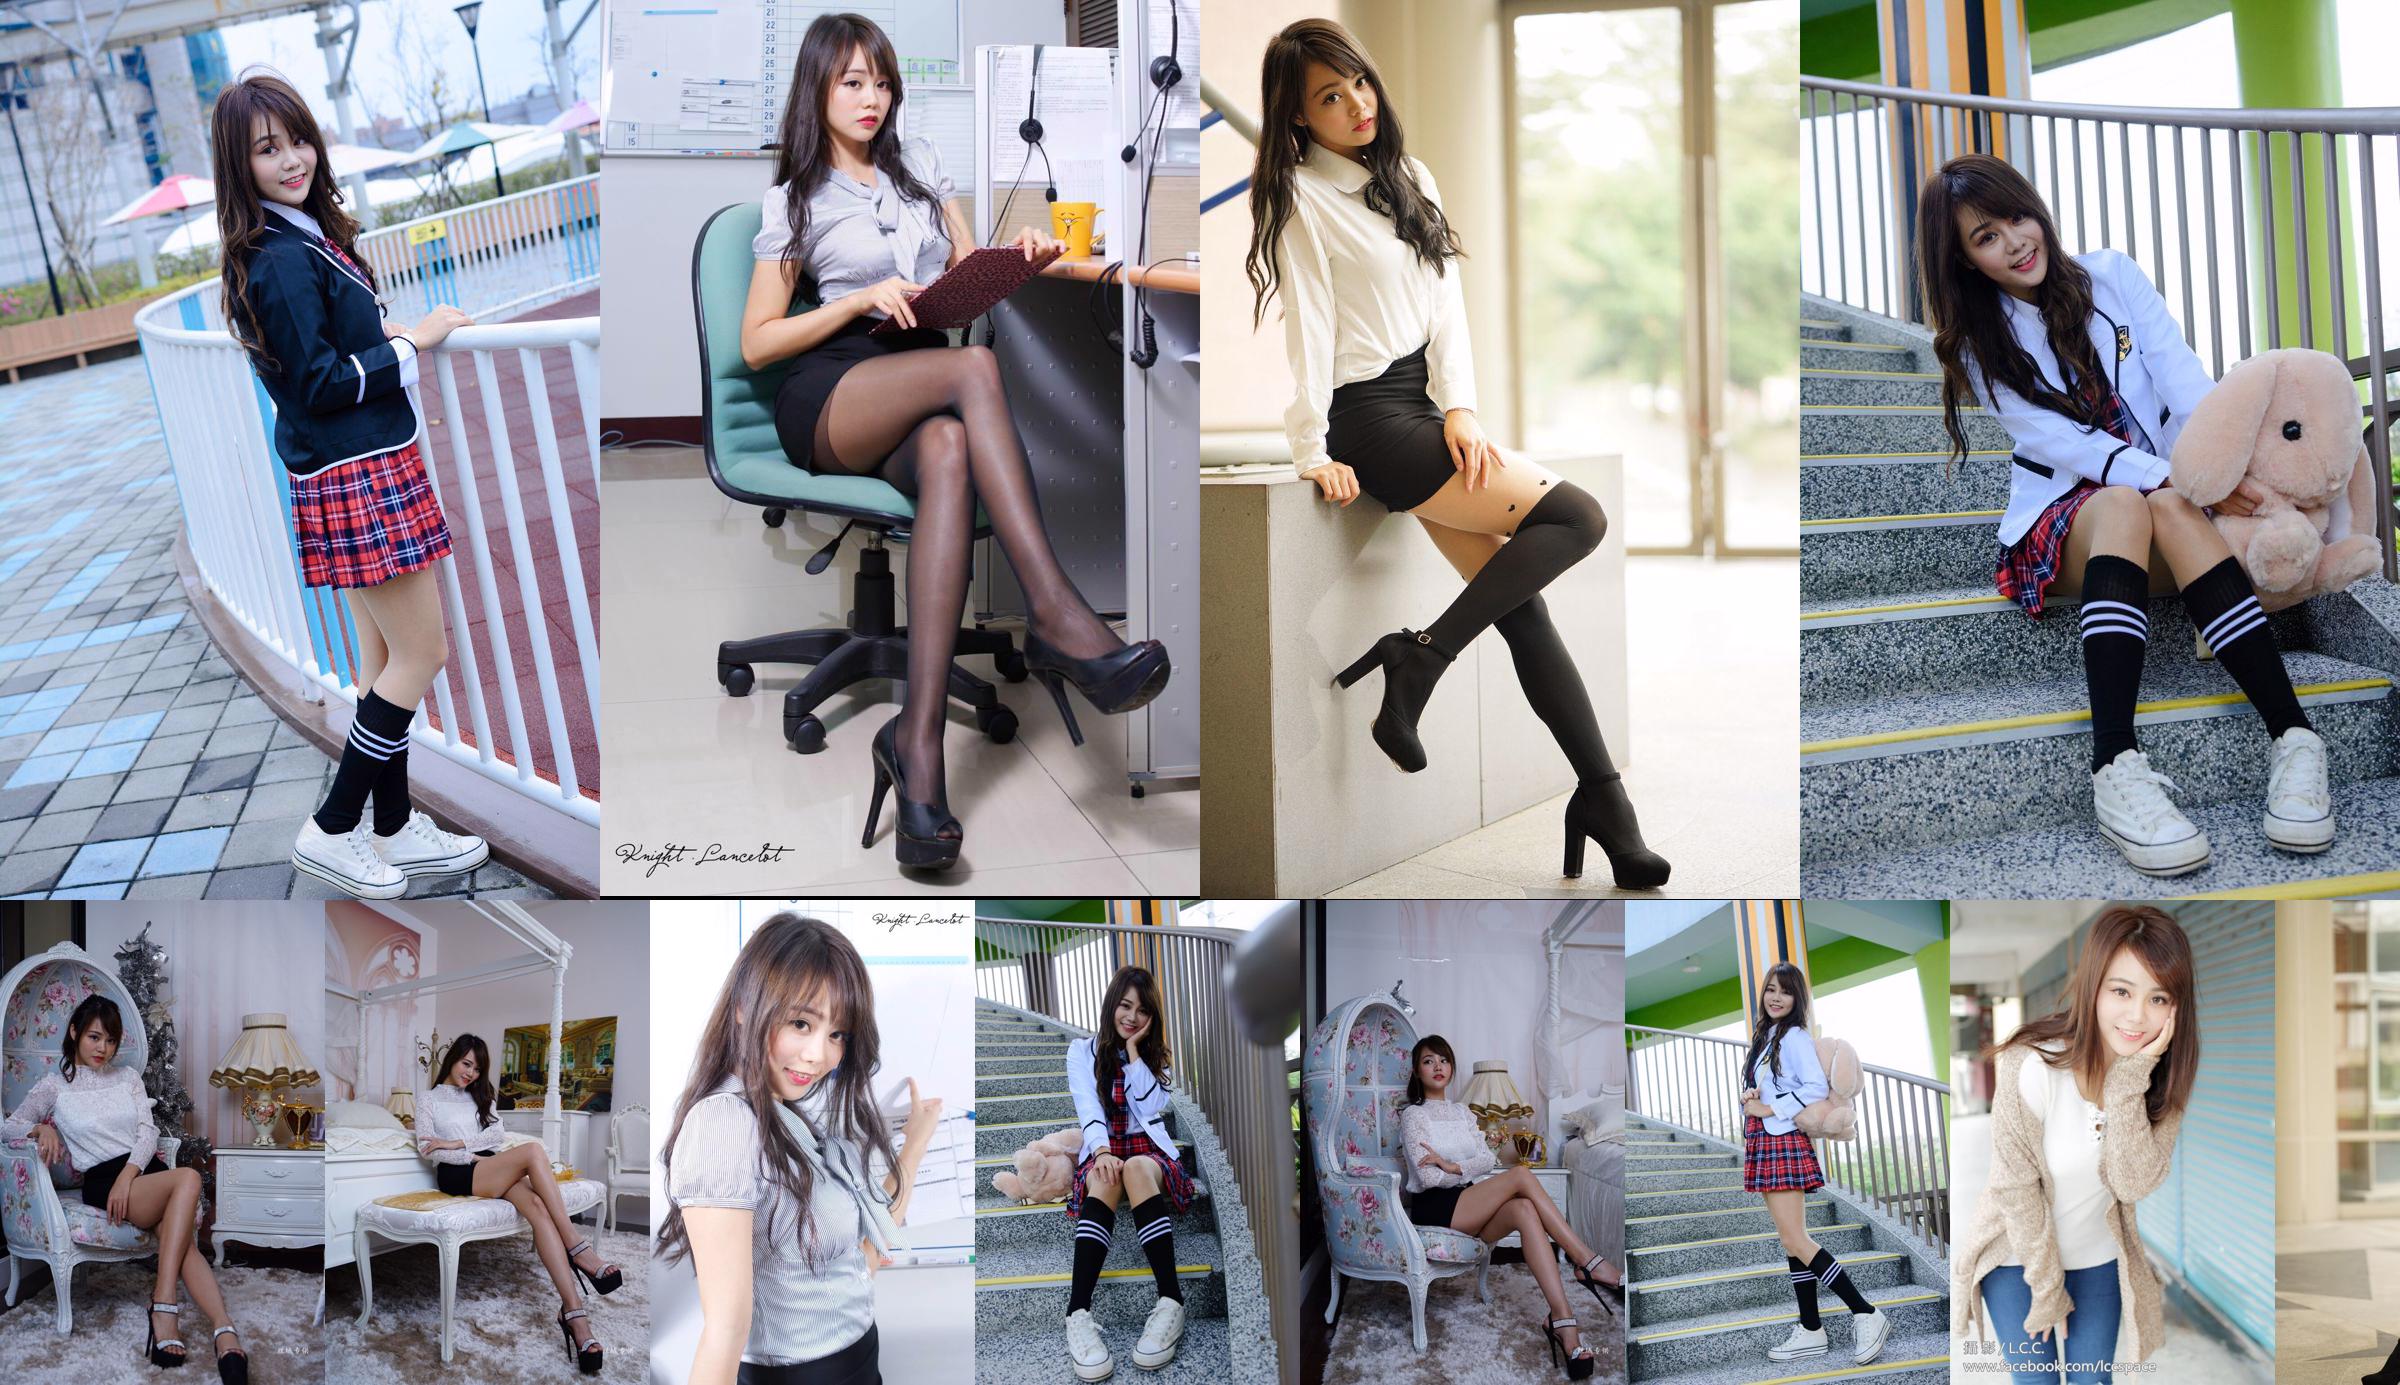 [Taiwan Internet celebrity beauty] Candy Sun Huitong "Asian University Outdoor Shooting" No.9a9060 Page 1